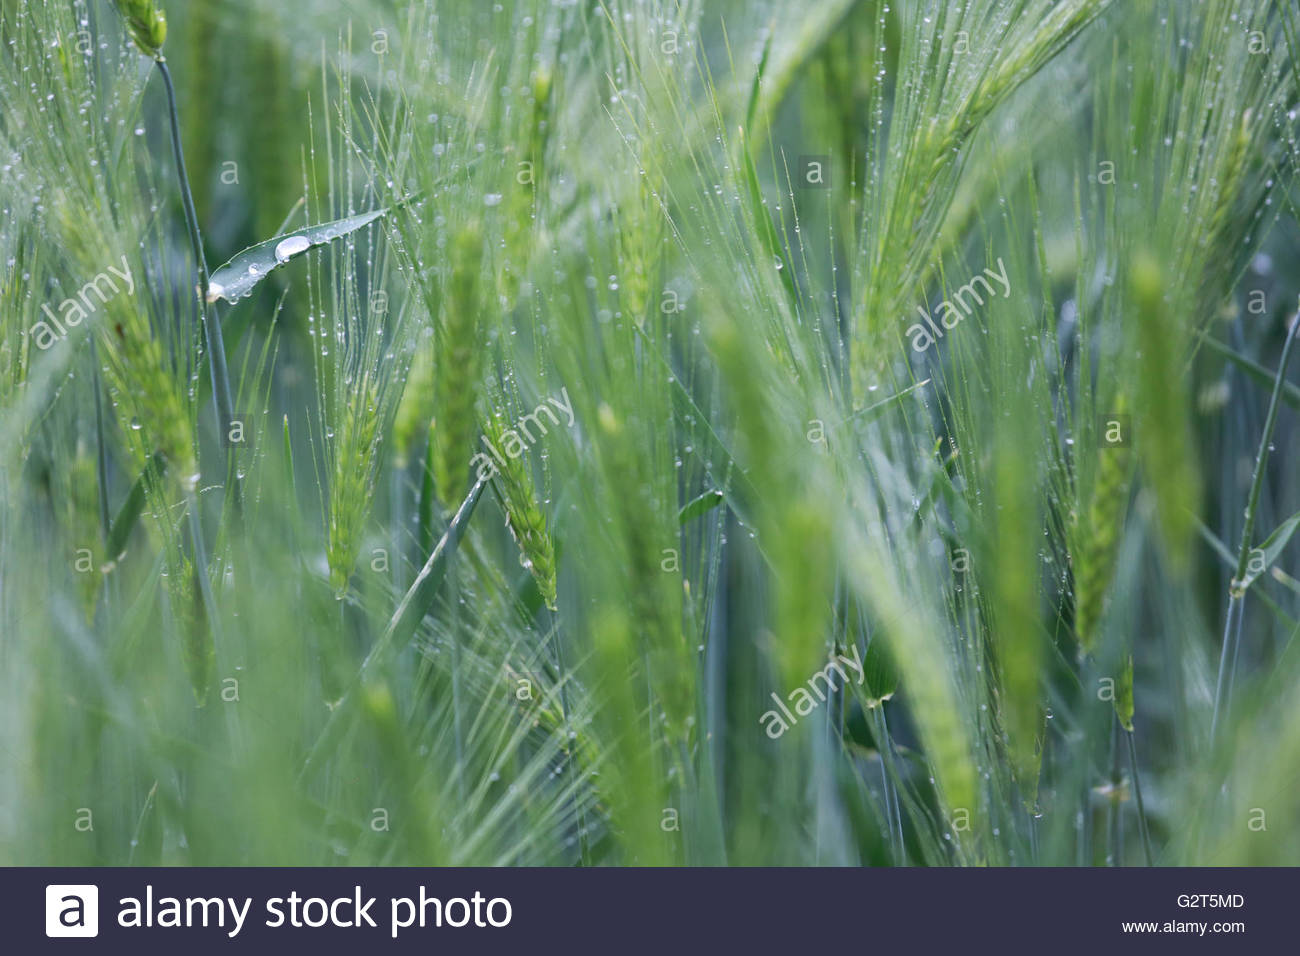 Large raindrop in a field of green, unripe corn Stock Photo